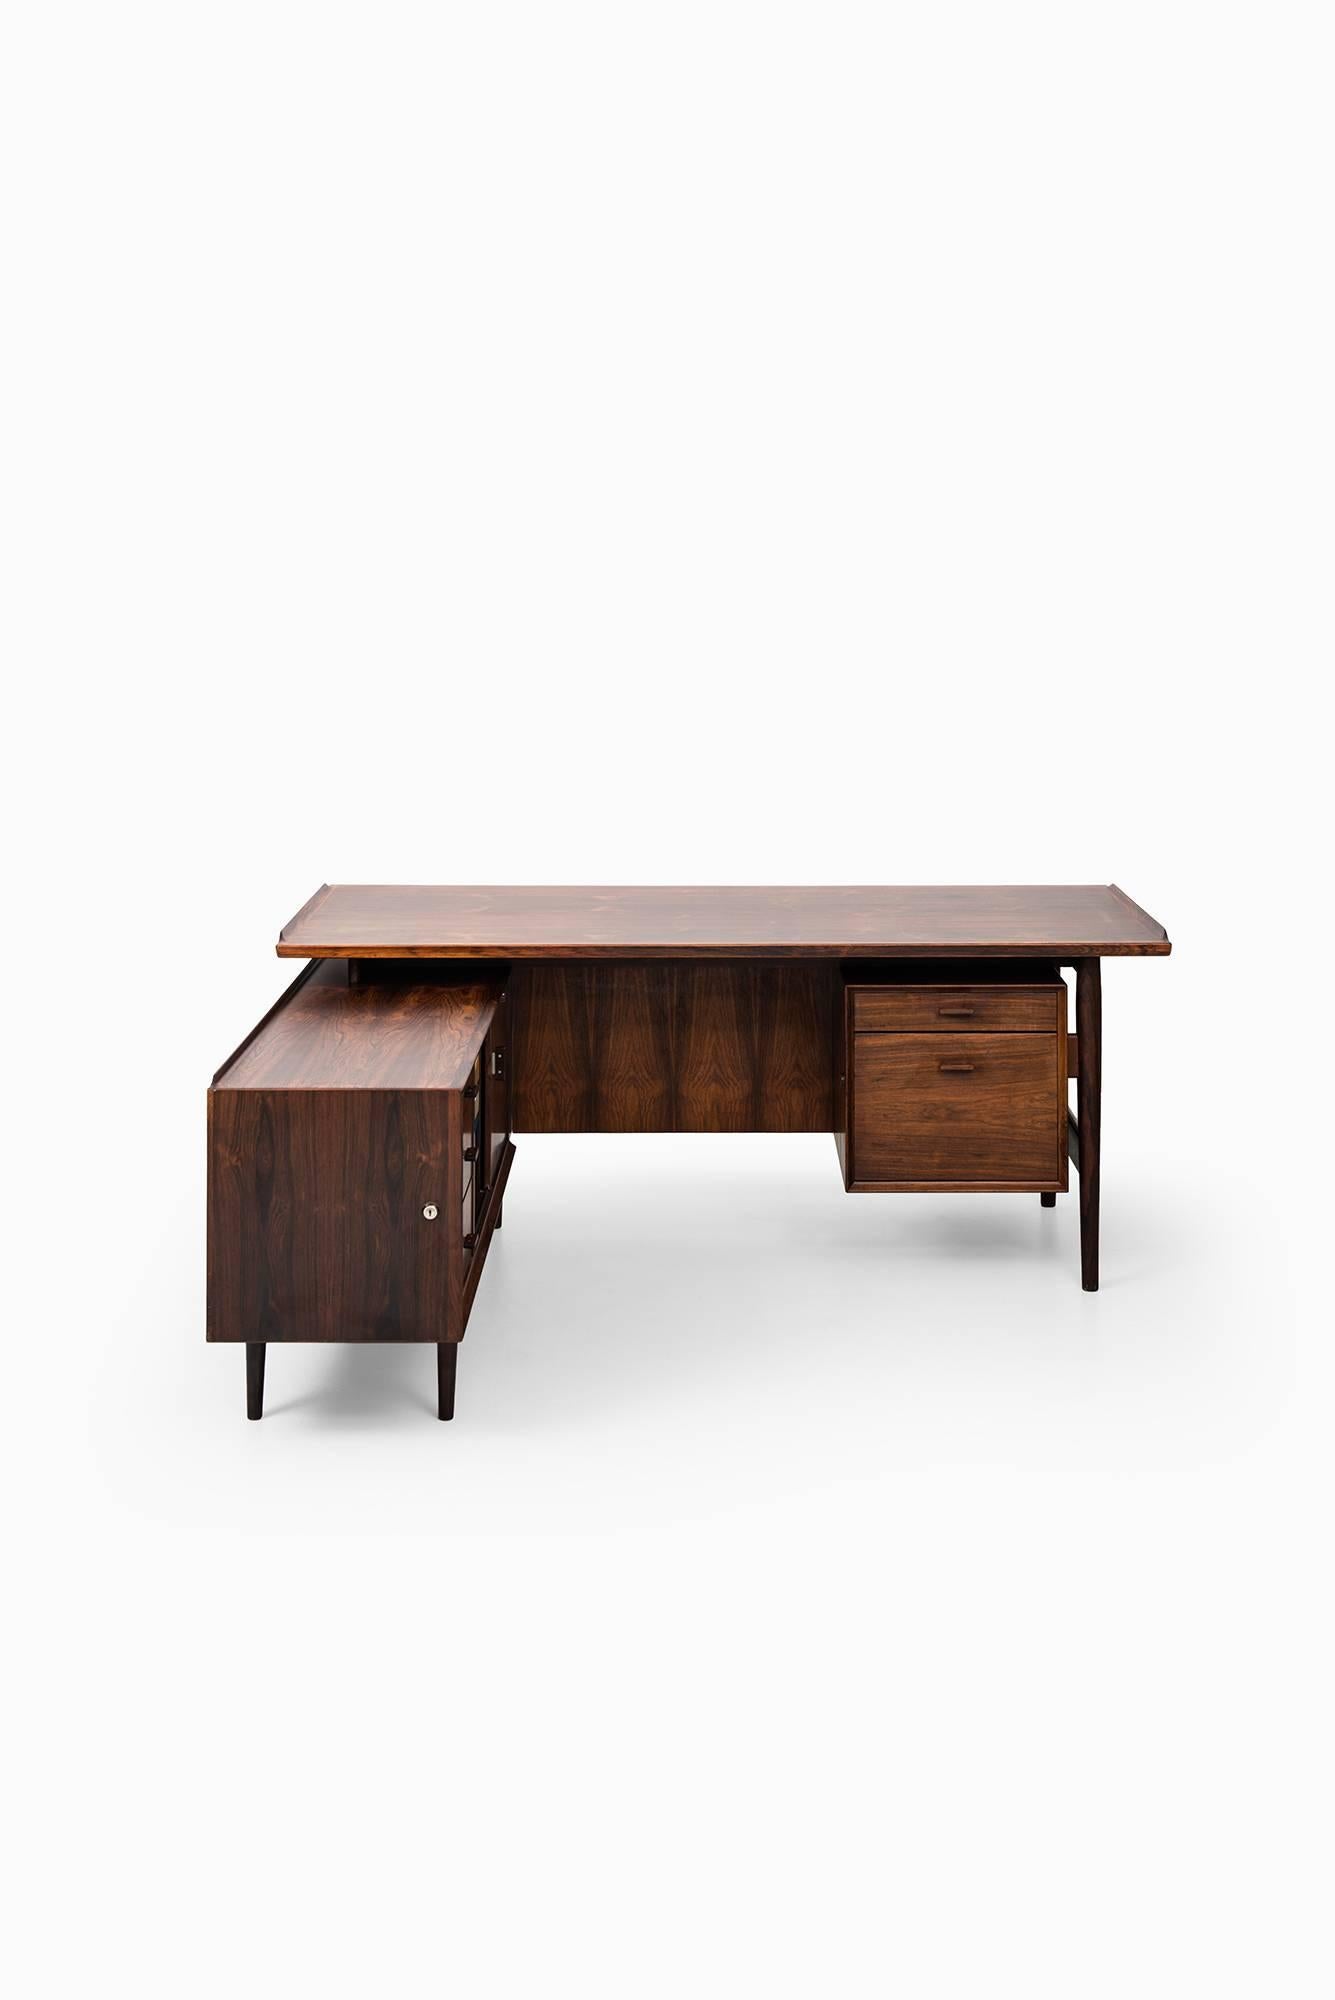 Rare L-shaped desk with sideboard model 209 designed by Arne Vodder. Produced by Sibast Møbelfabrik in Denmark.